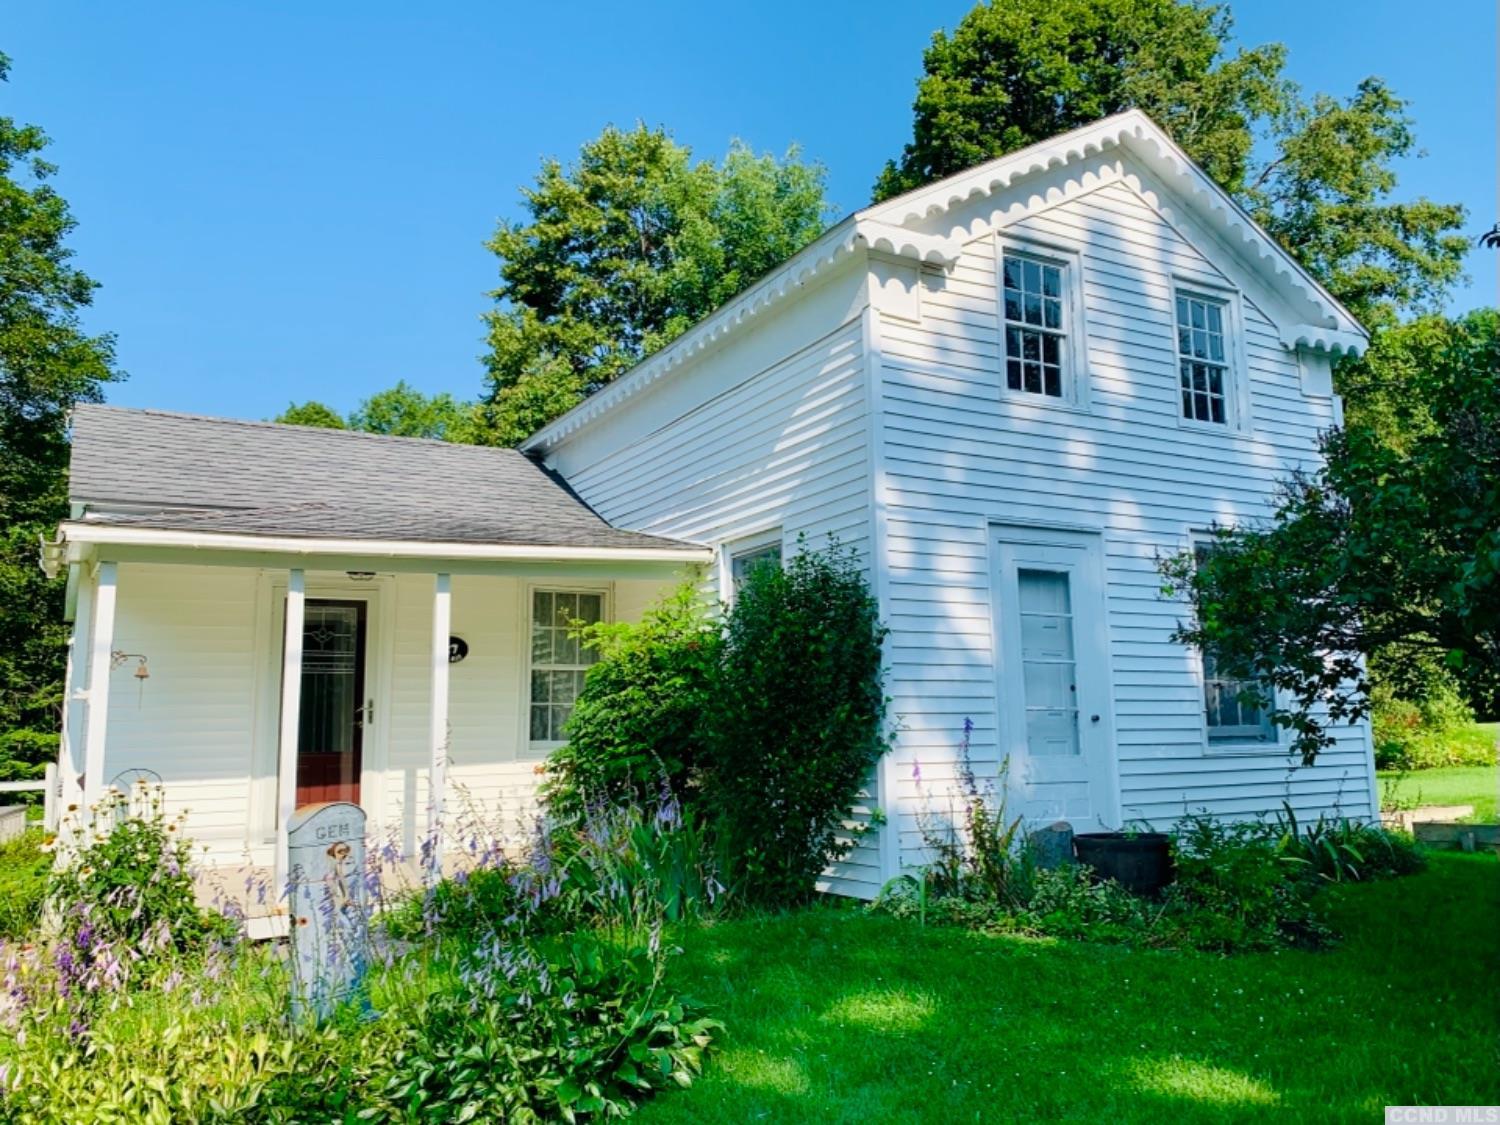 Affordable, Adorable Greek Revival Farmhouse, $169K